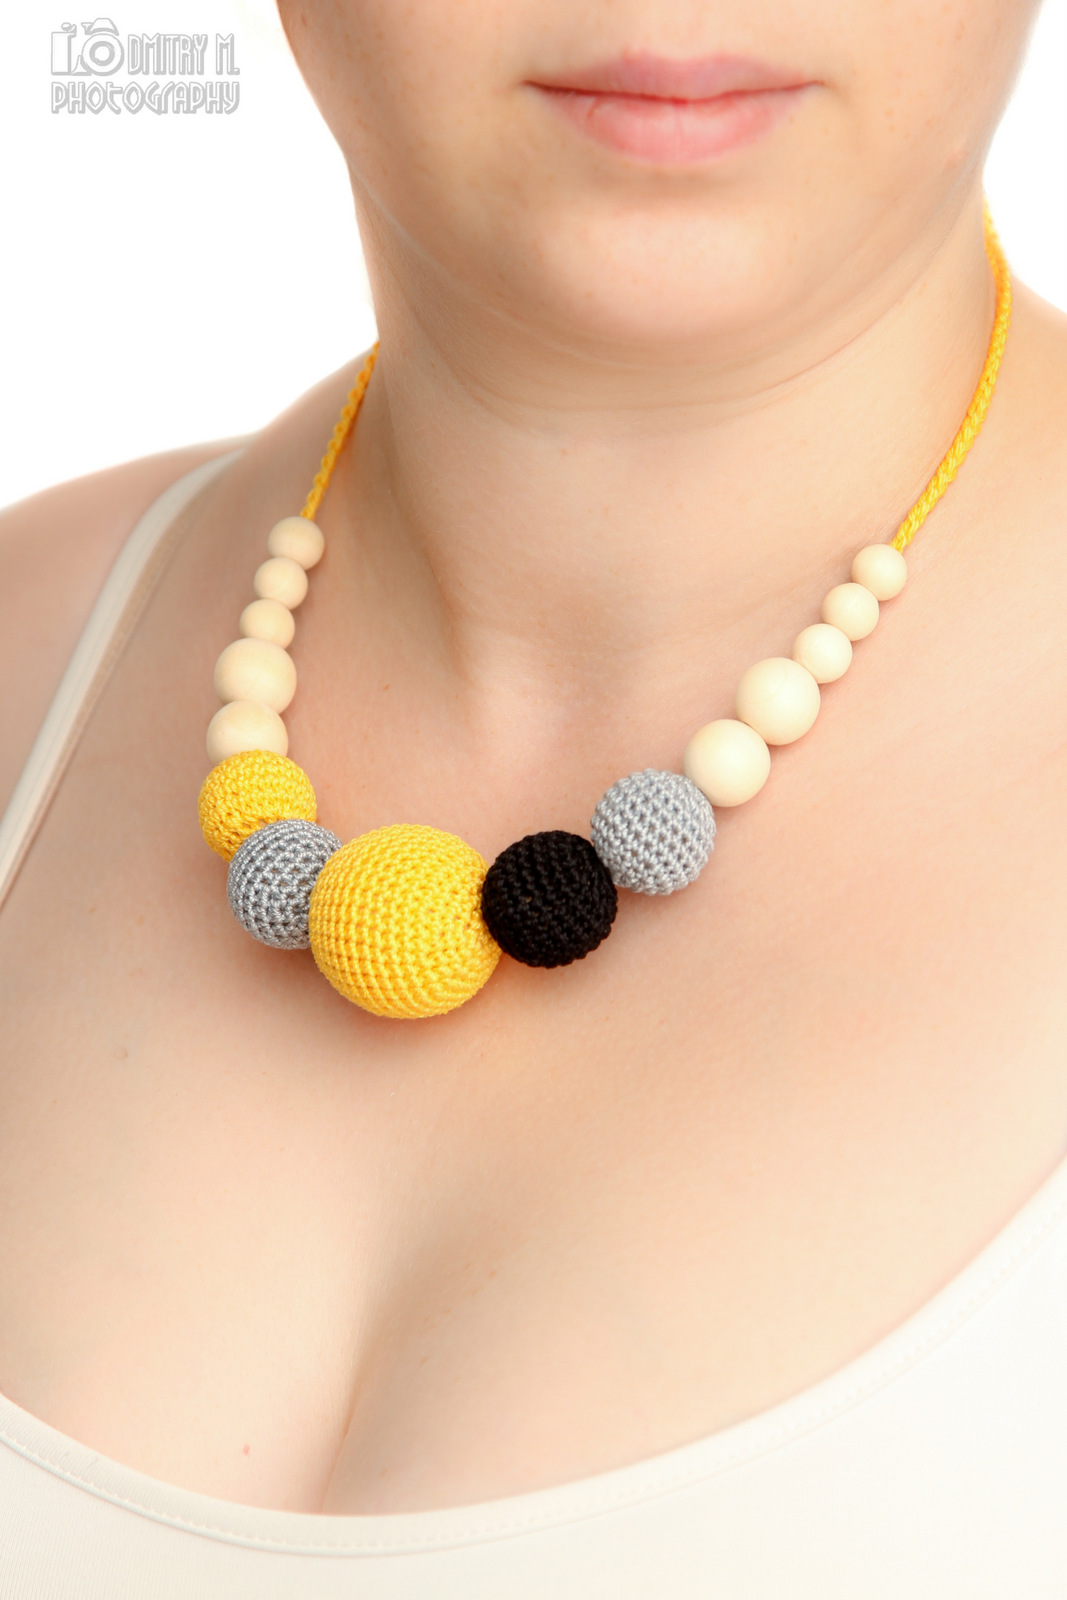 Summer Fashion - Breastfeeding Necklace Nursing Statement Jewelry Strand Necklace - Grey Yellow Black